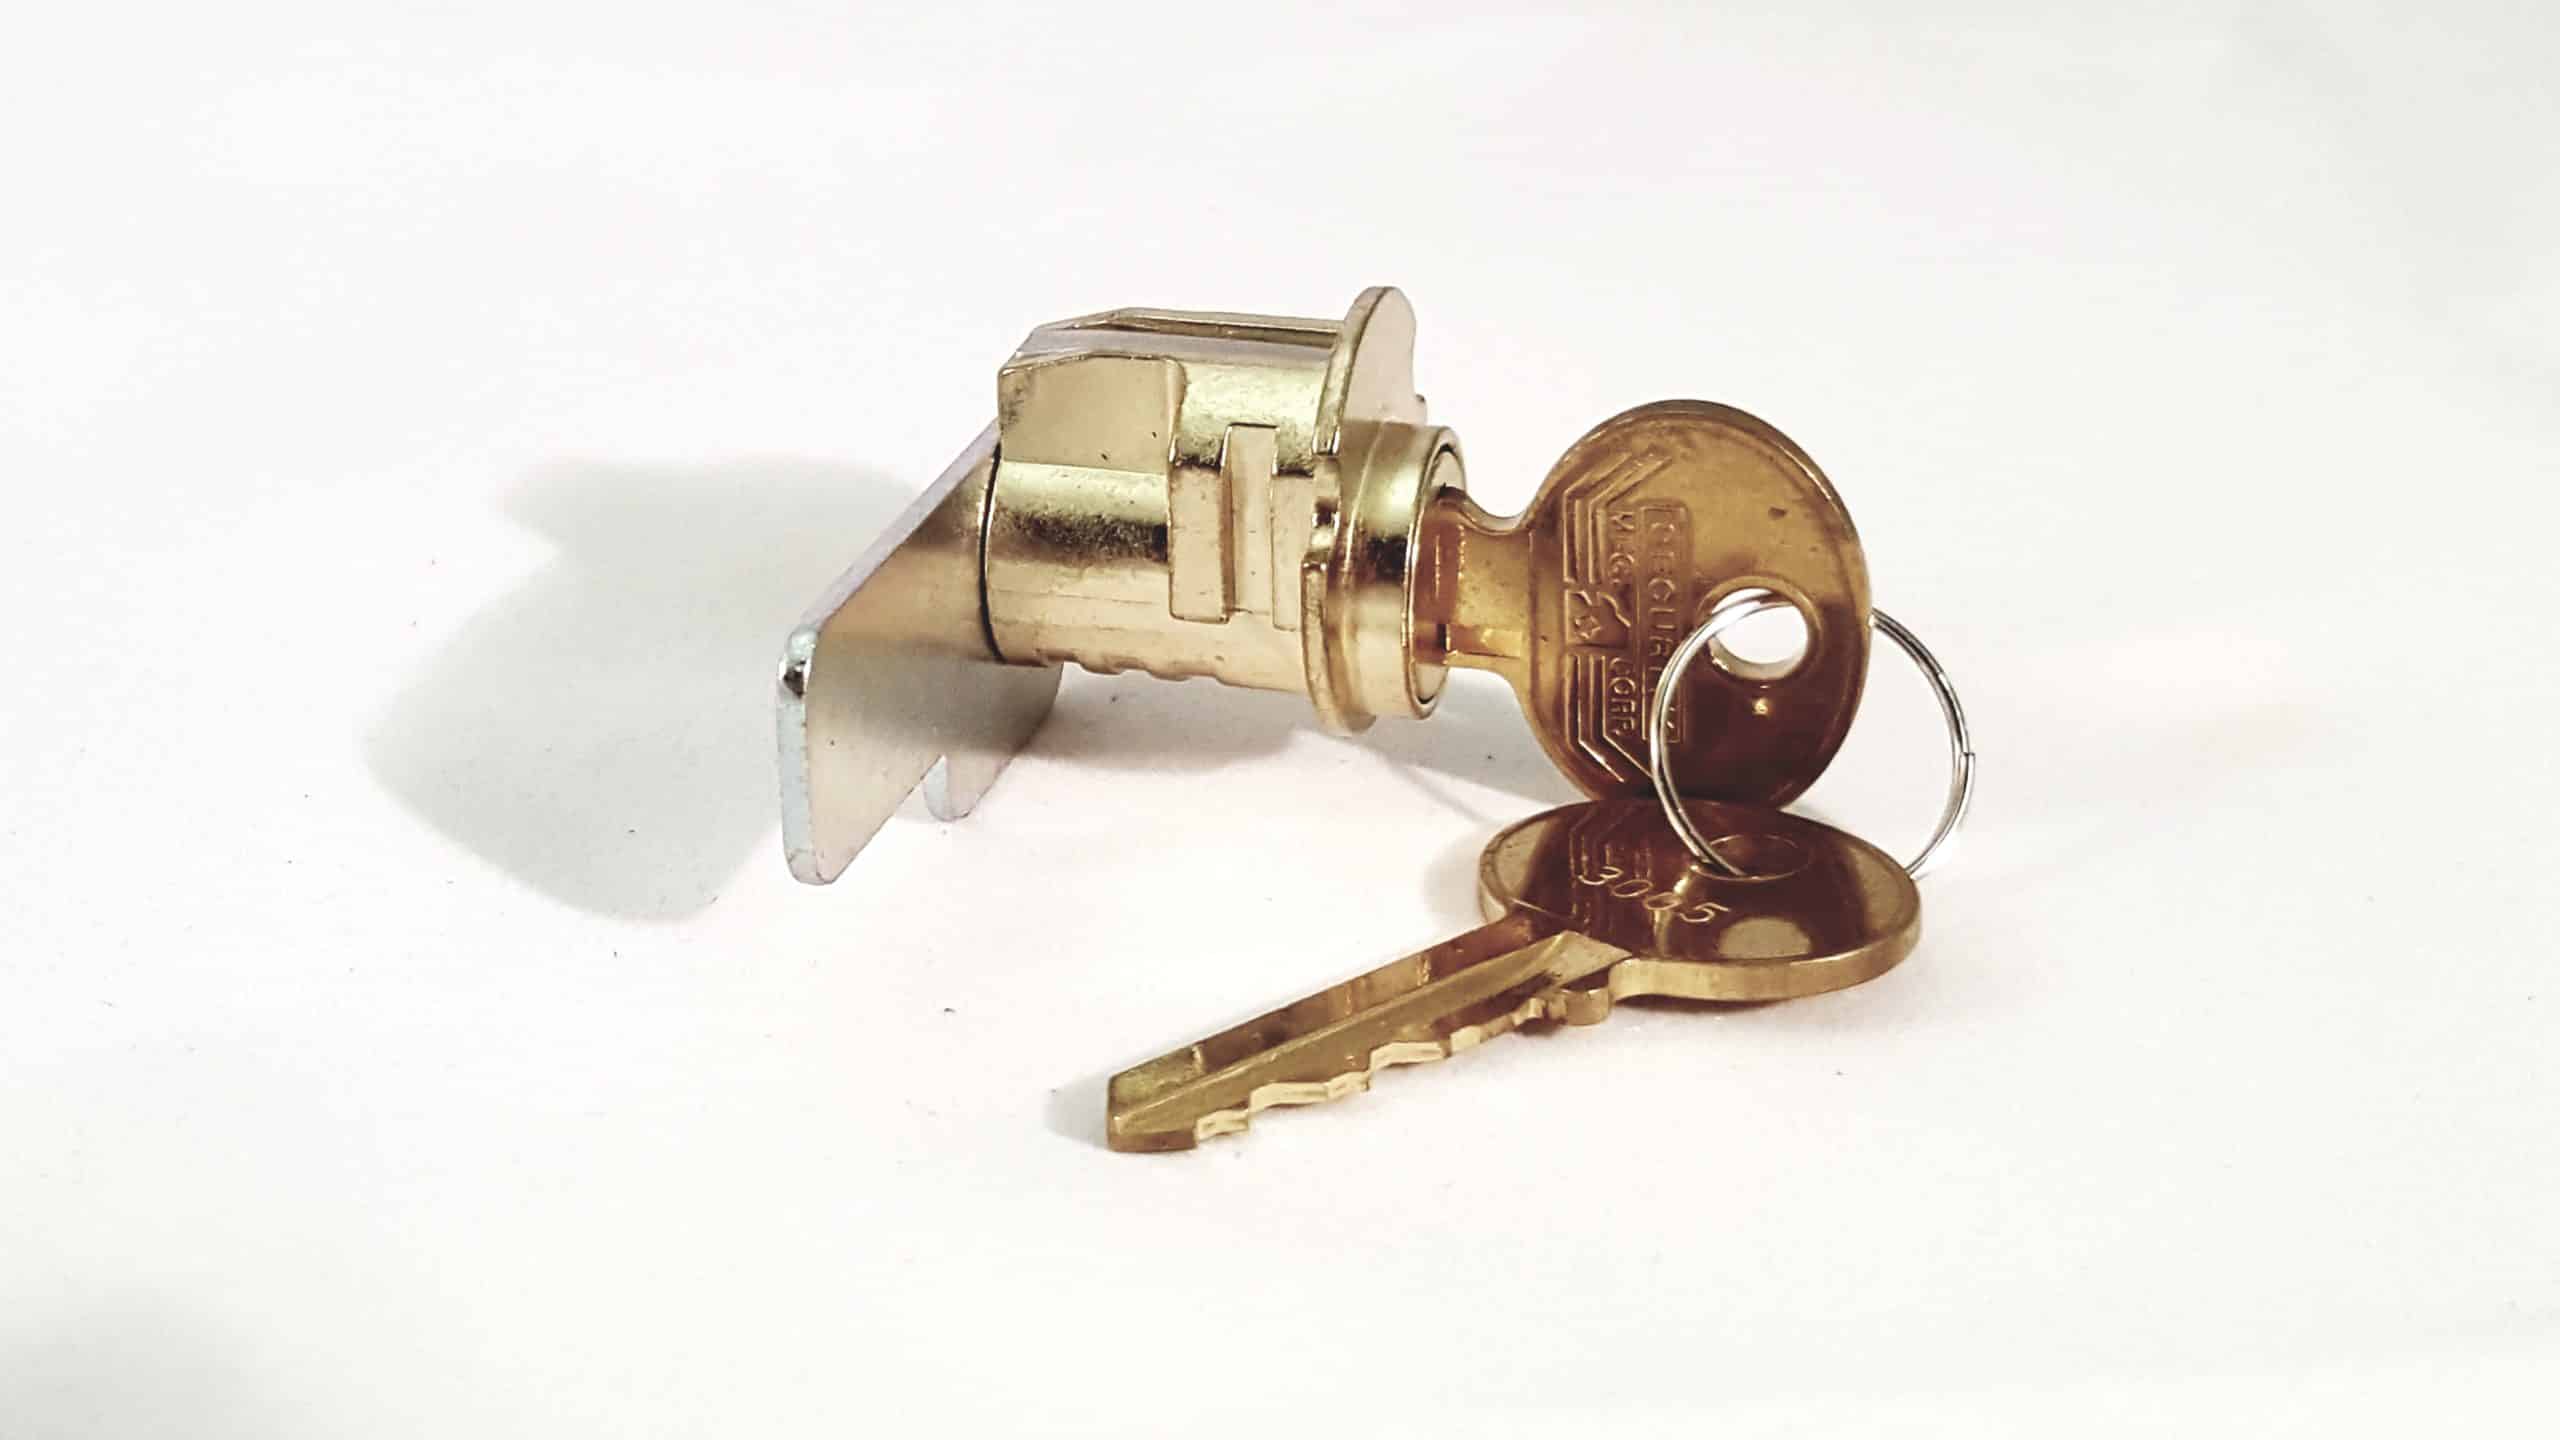 American Locker key and lock